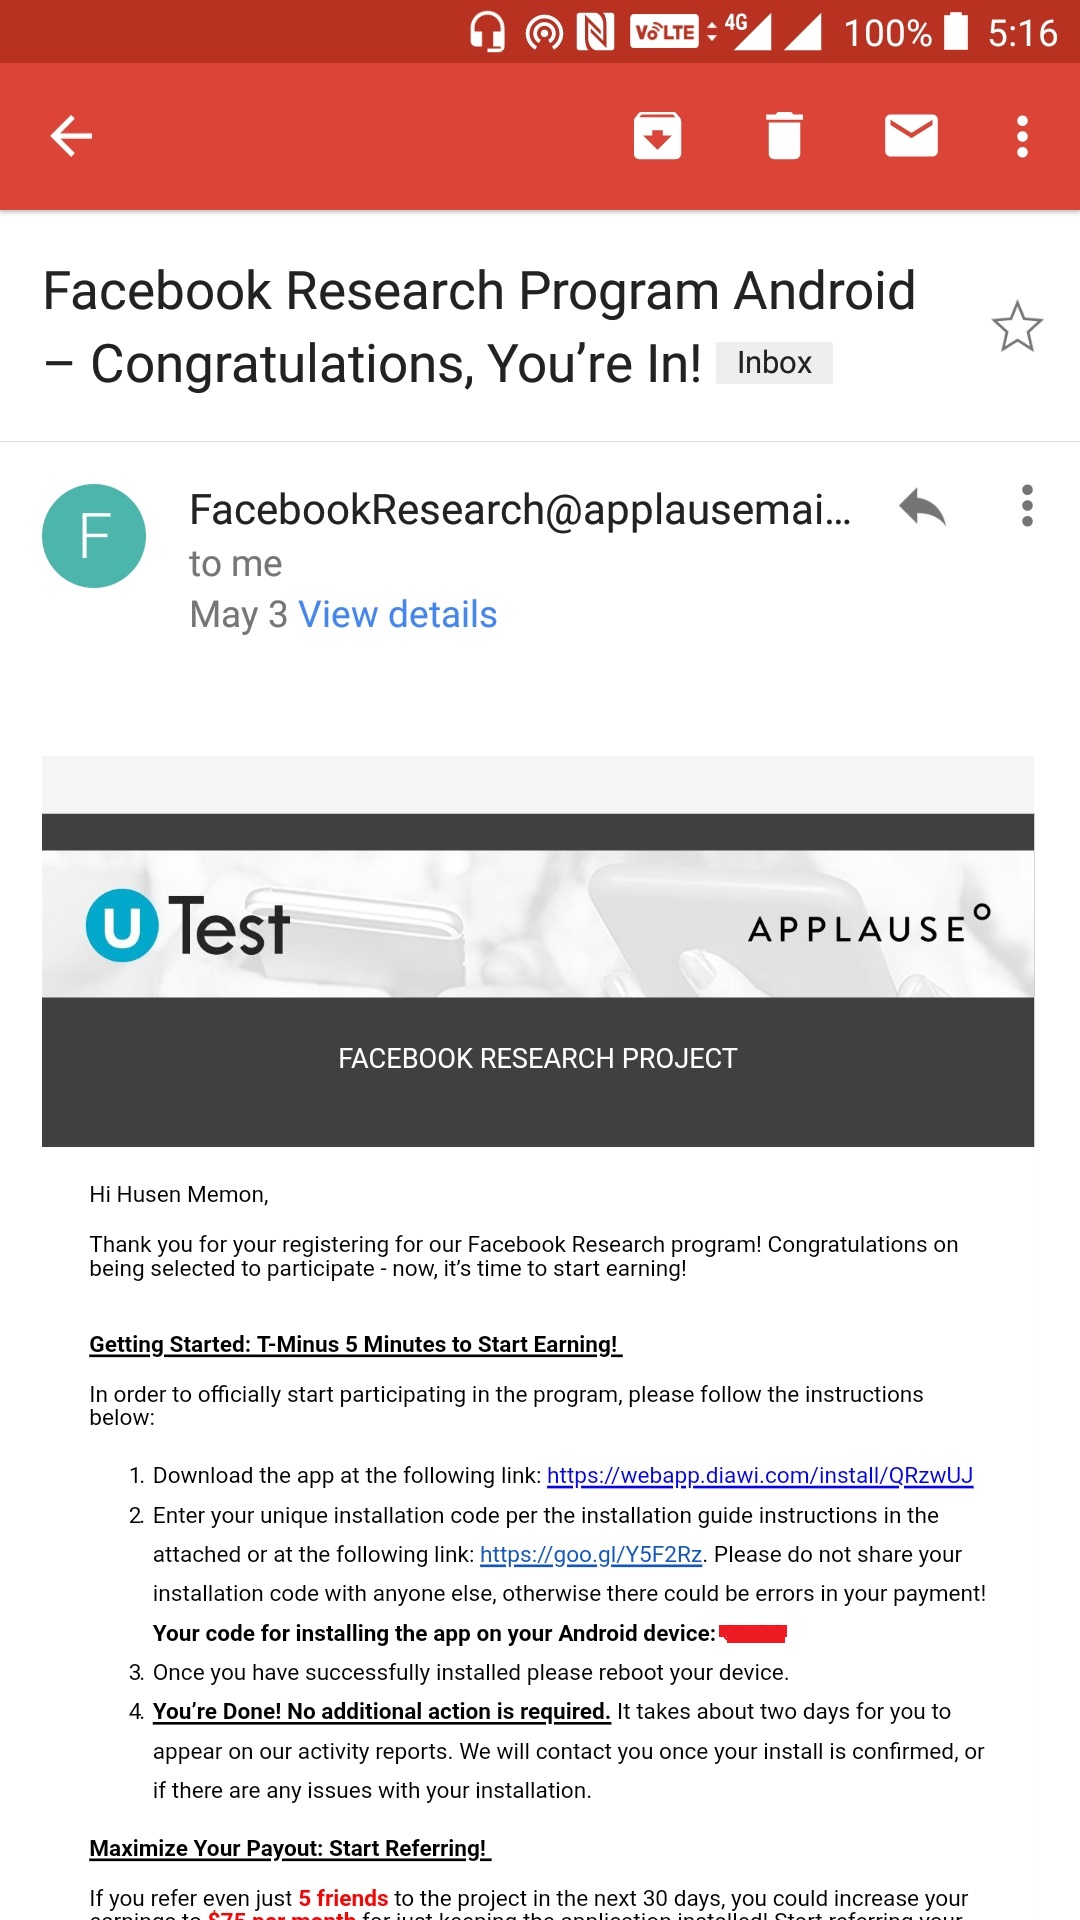 Facebook Research App Program Signup